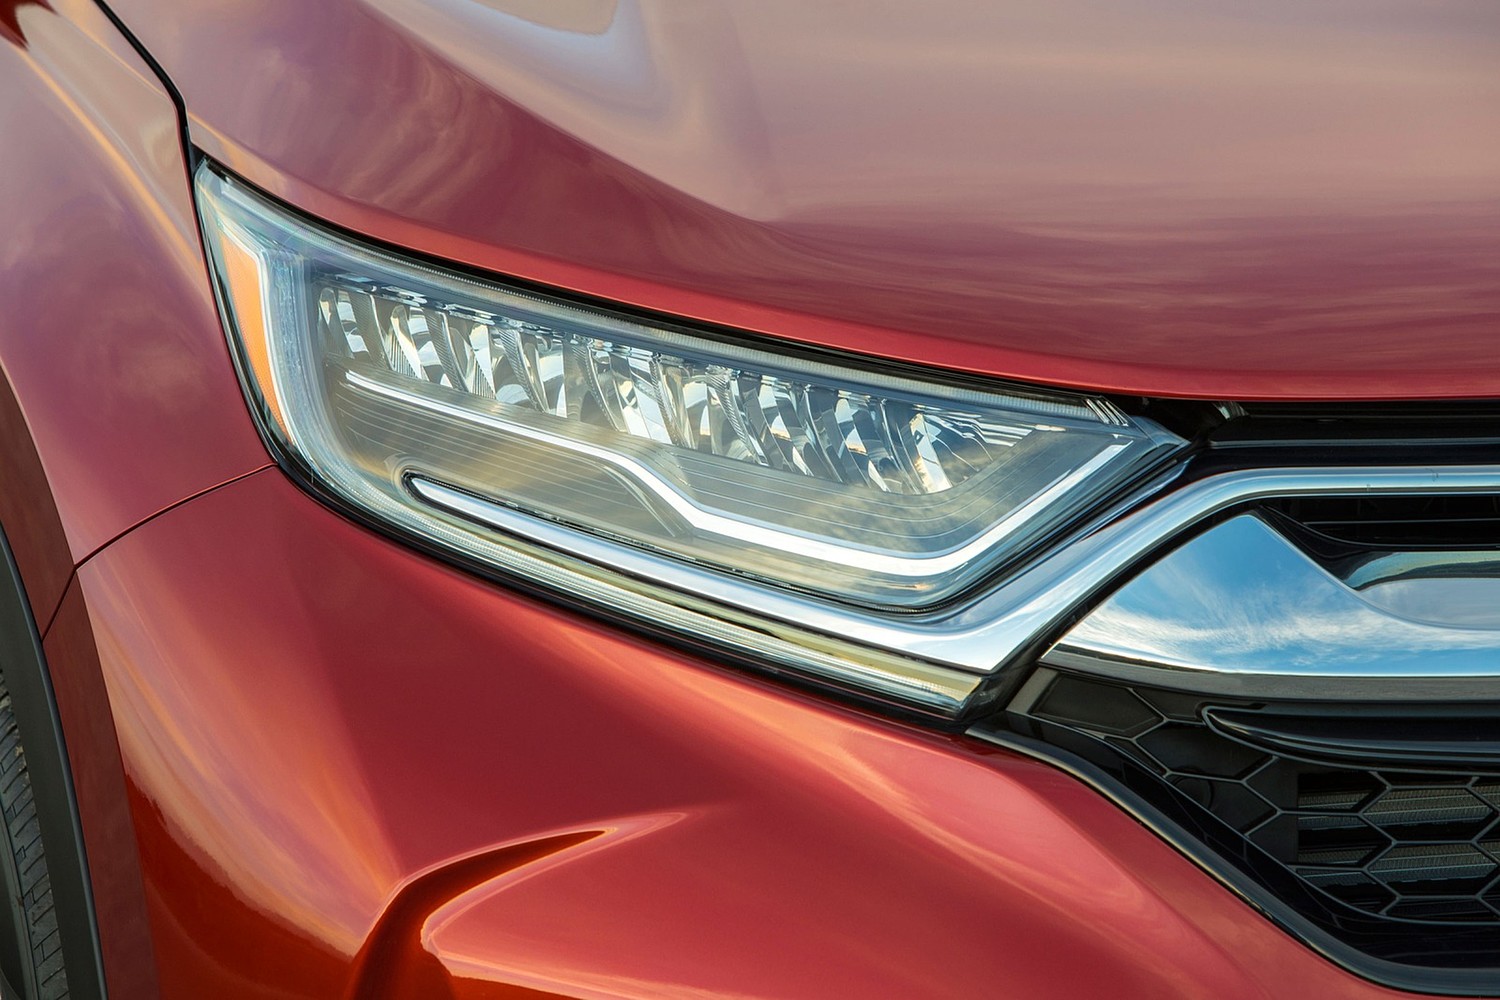 Honda CR-V Touring 4dr SUV Headlamp Detail (2017 model year shown)